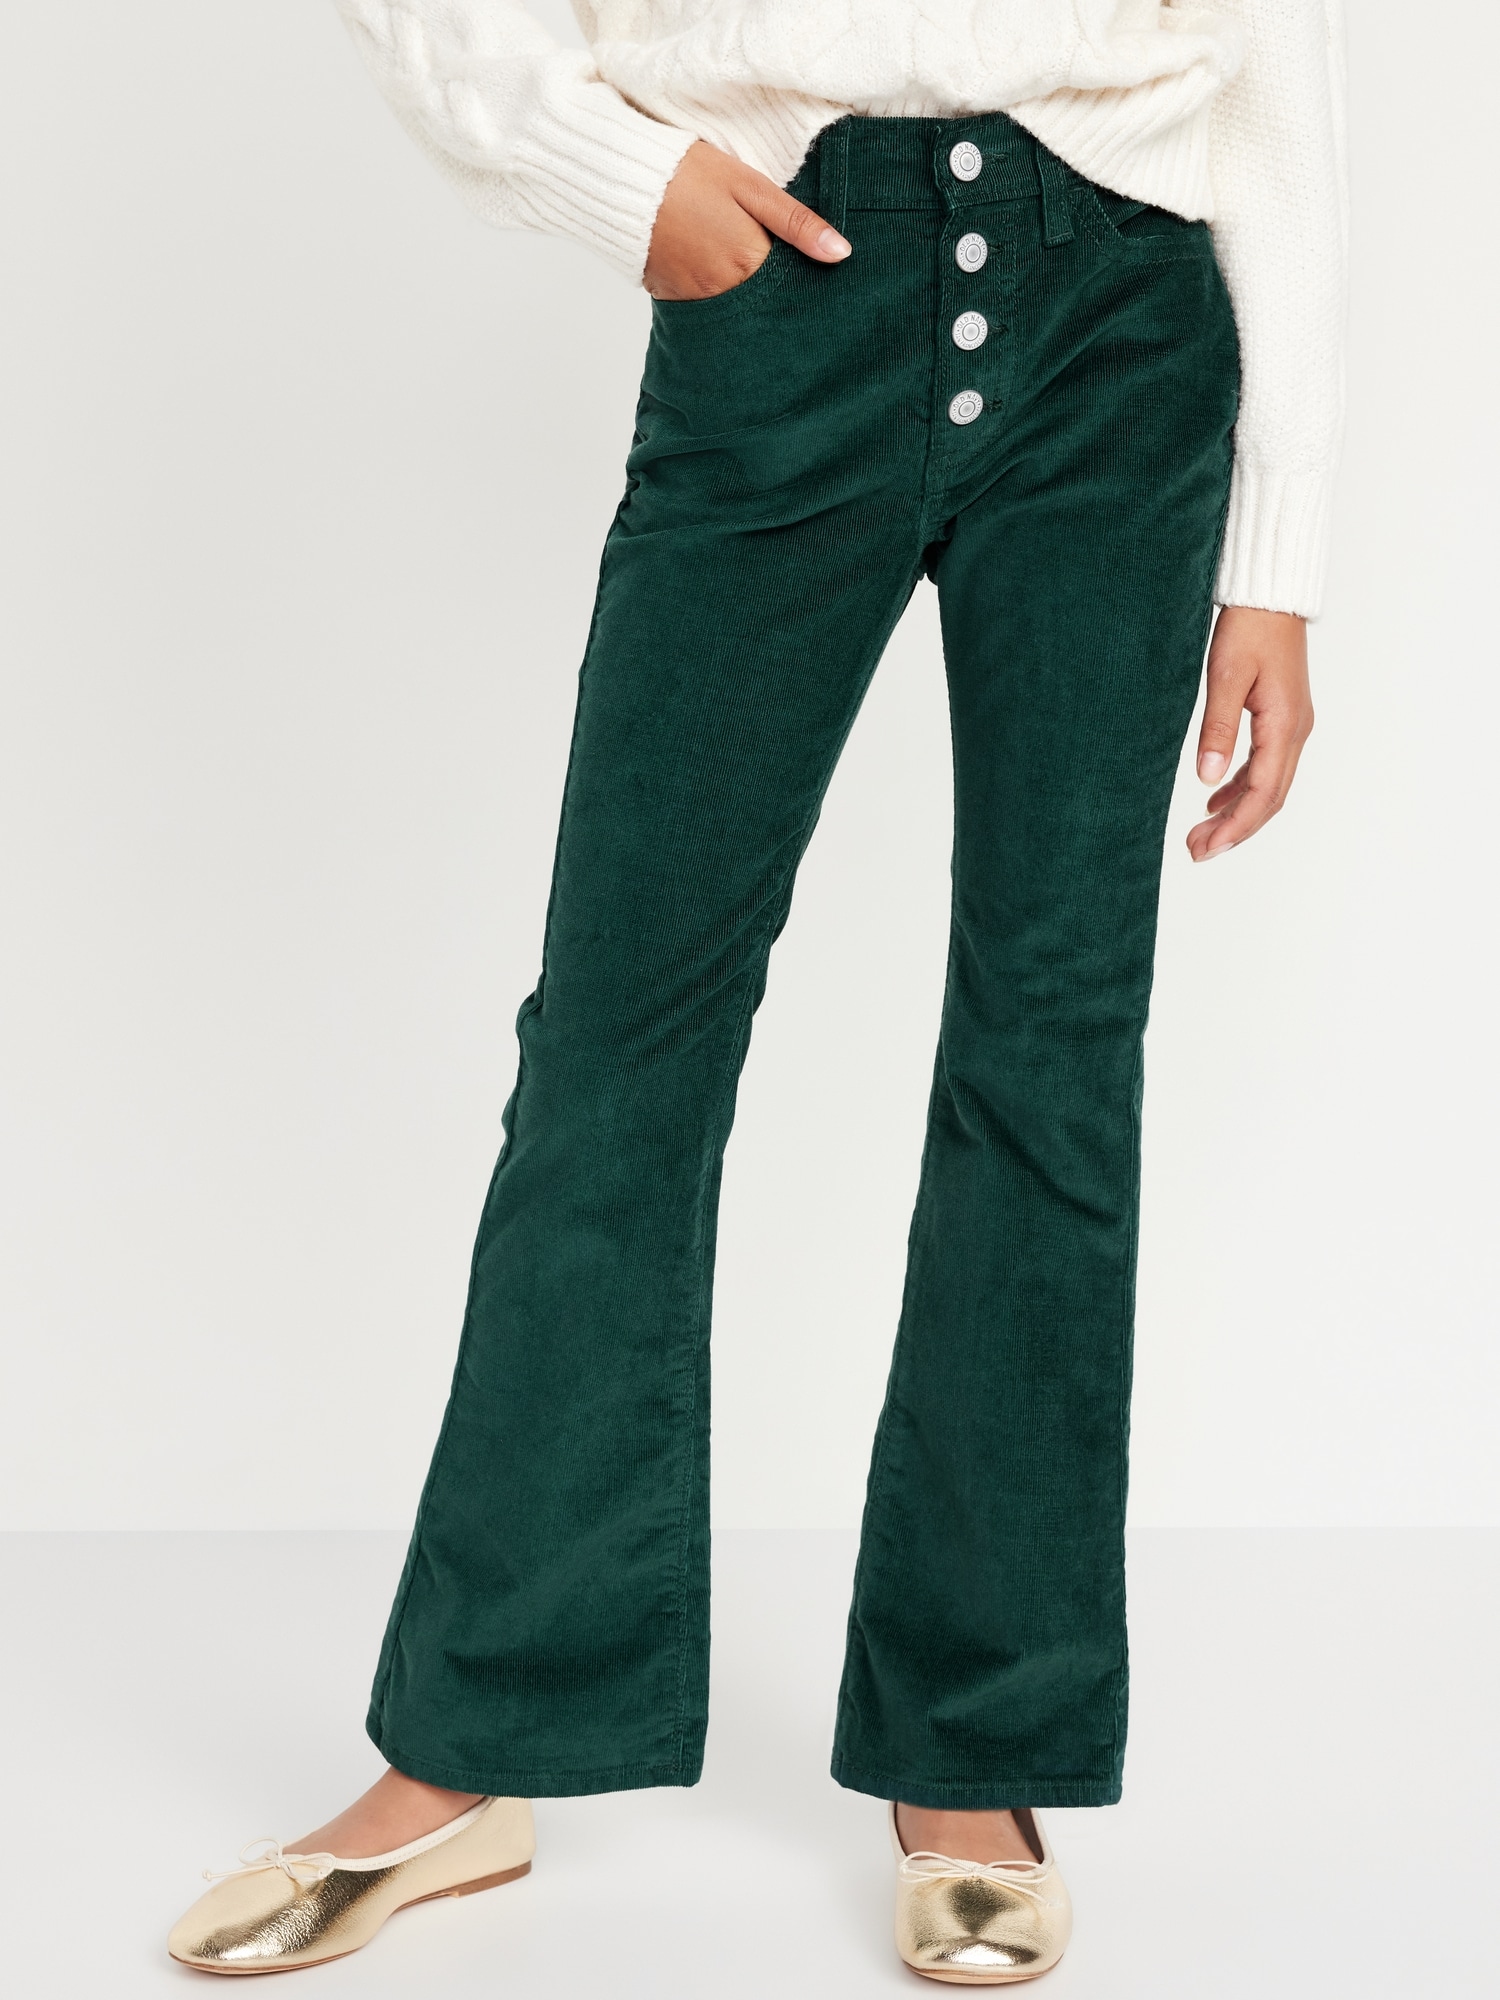 70s Blue & Green Plaid Kick Flare Trousers - Medium Short